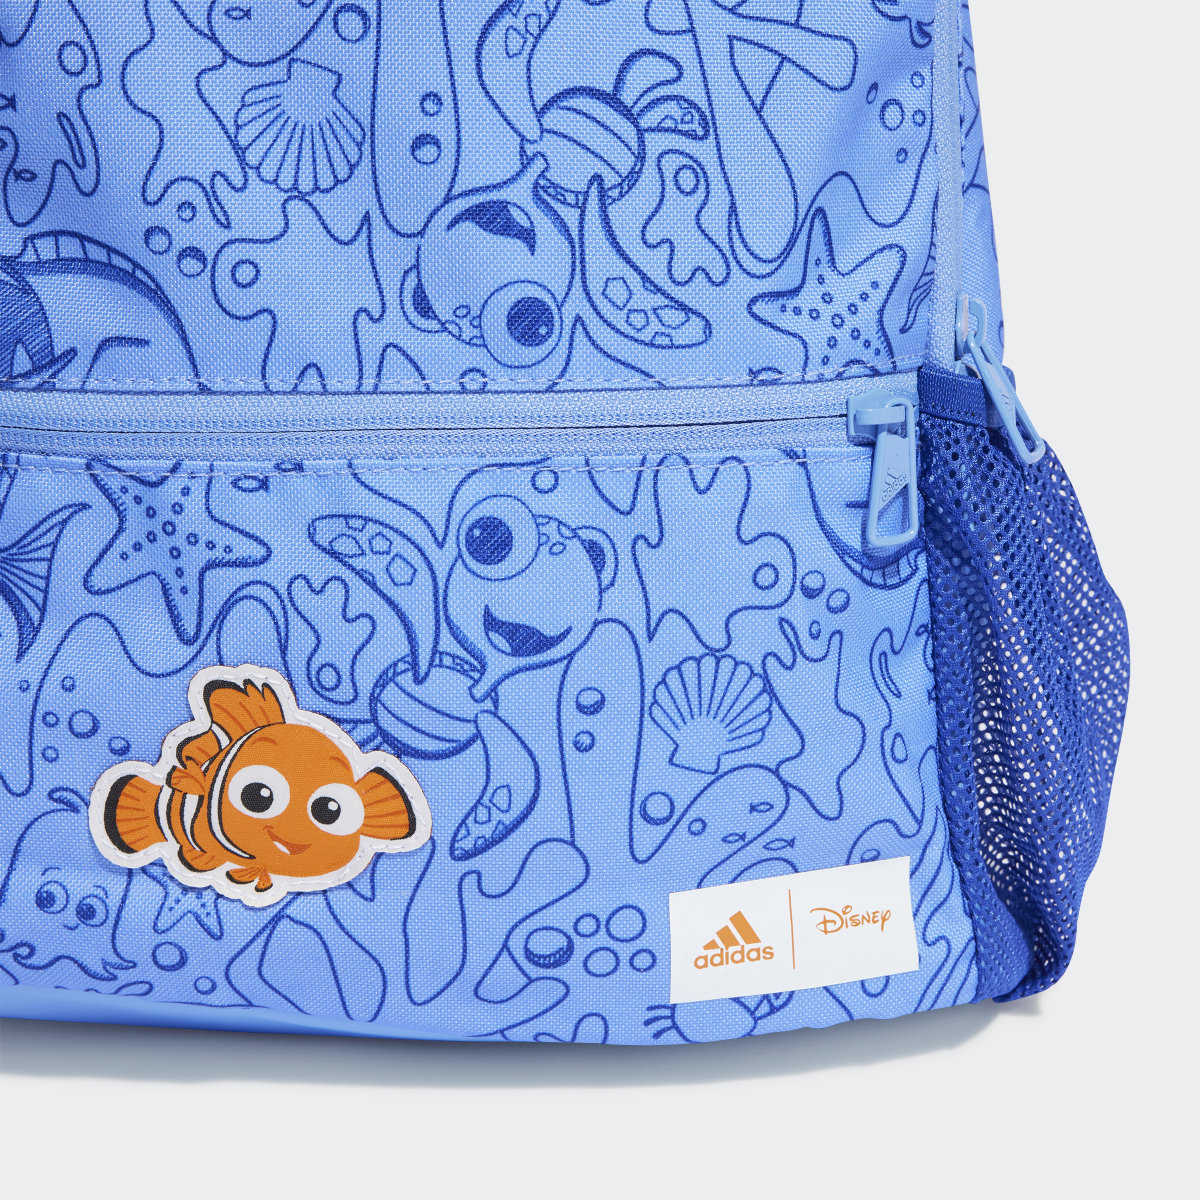 Adidas Sac à dos adidas x Disney Pixar Le Monde de Nemo. 6